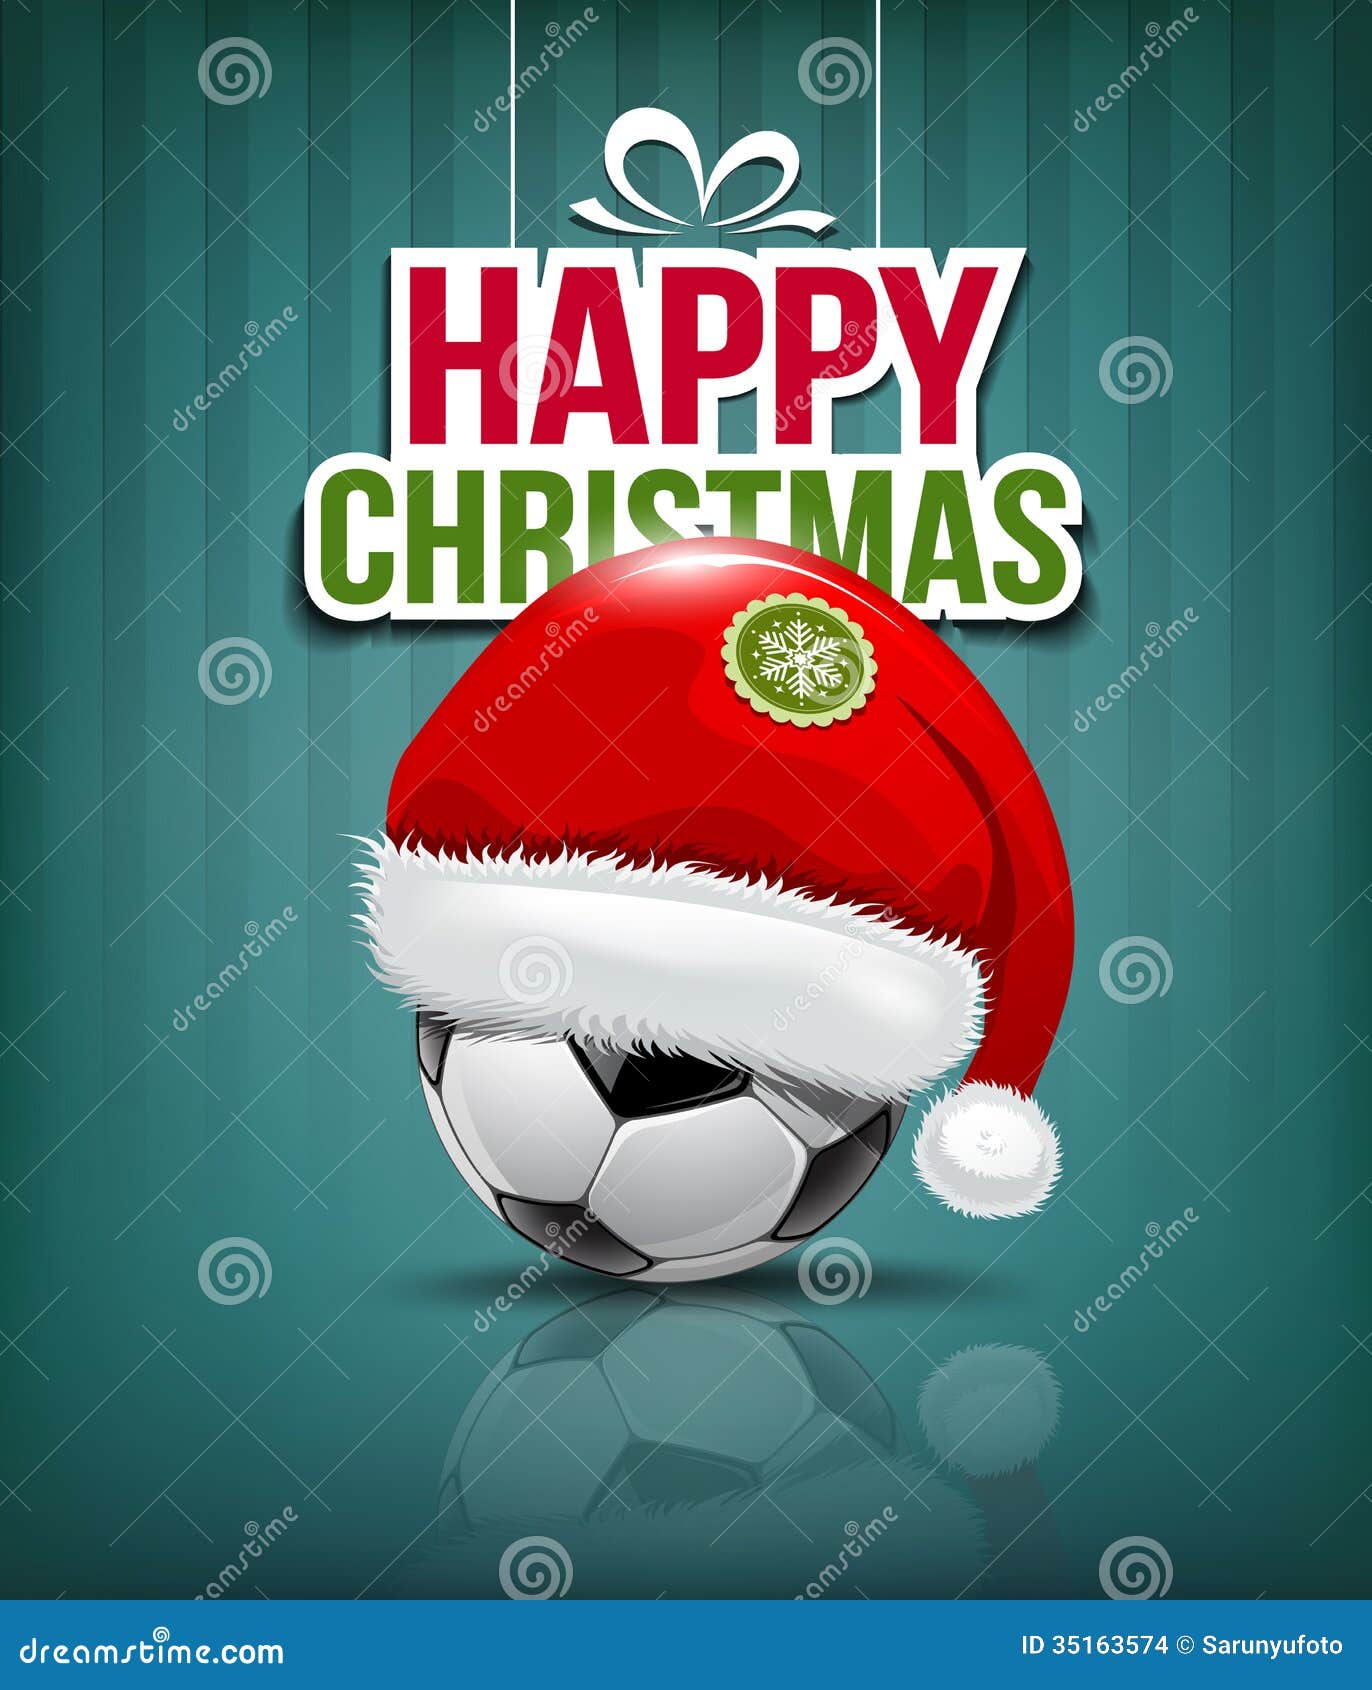 Merry Christmas Soccer